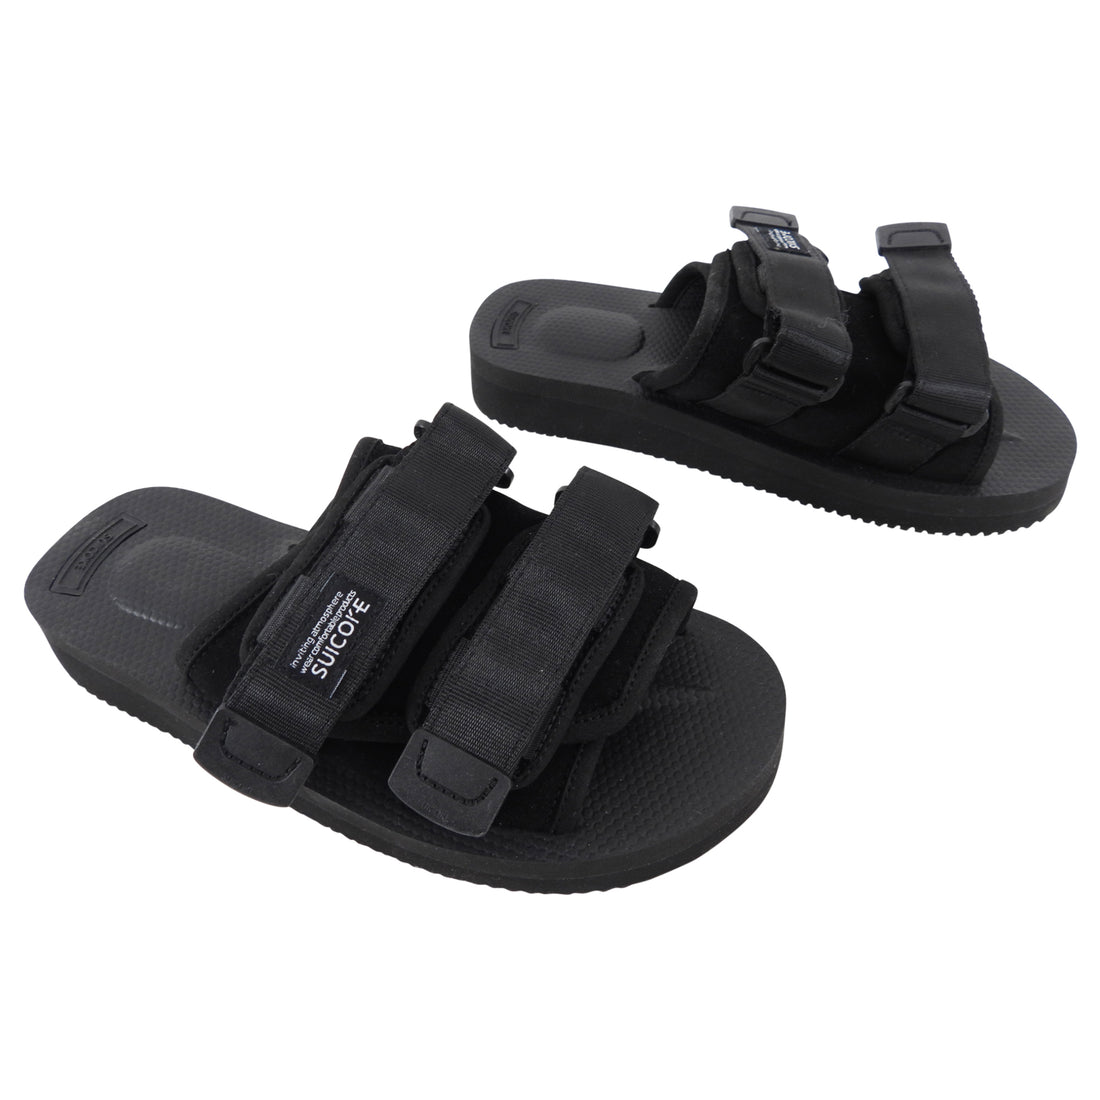 Suicoke Black Sandal Slides - USA 6